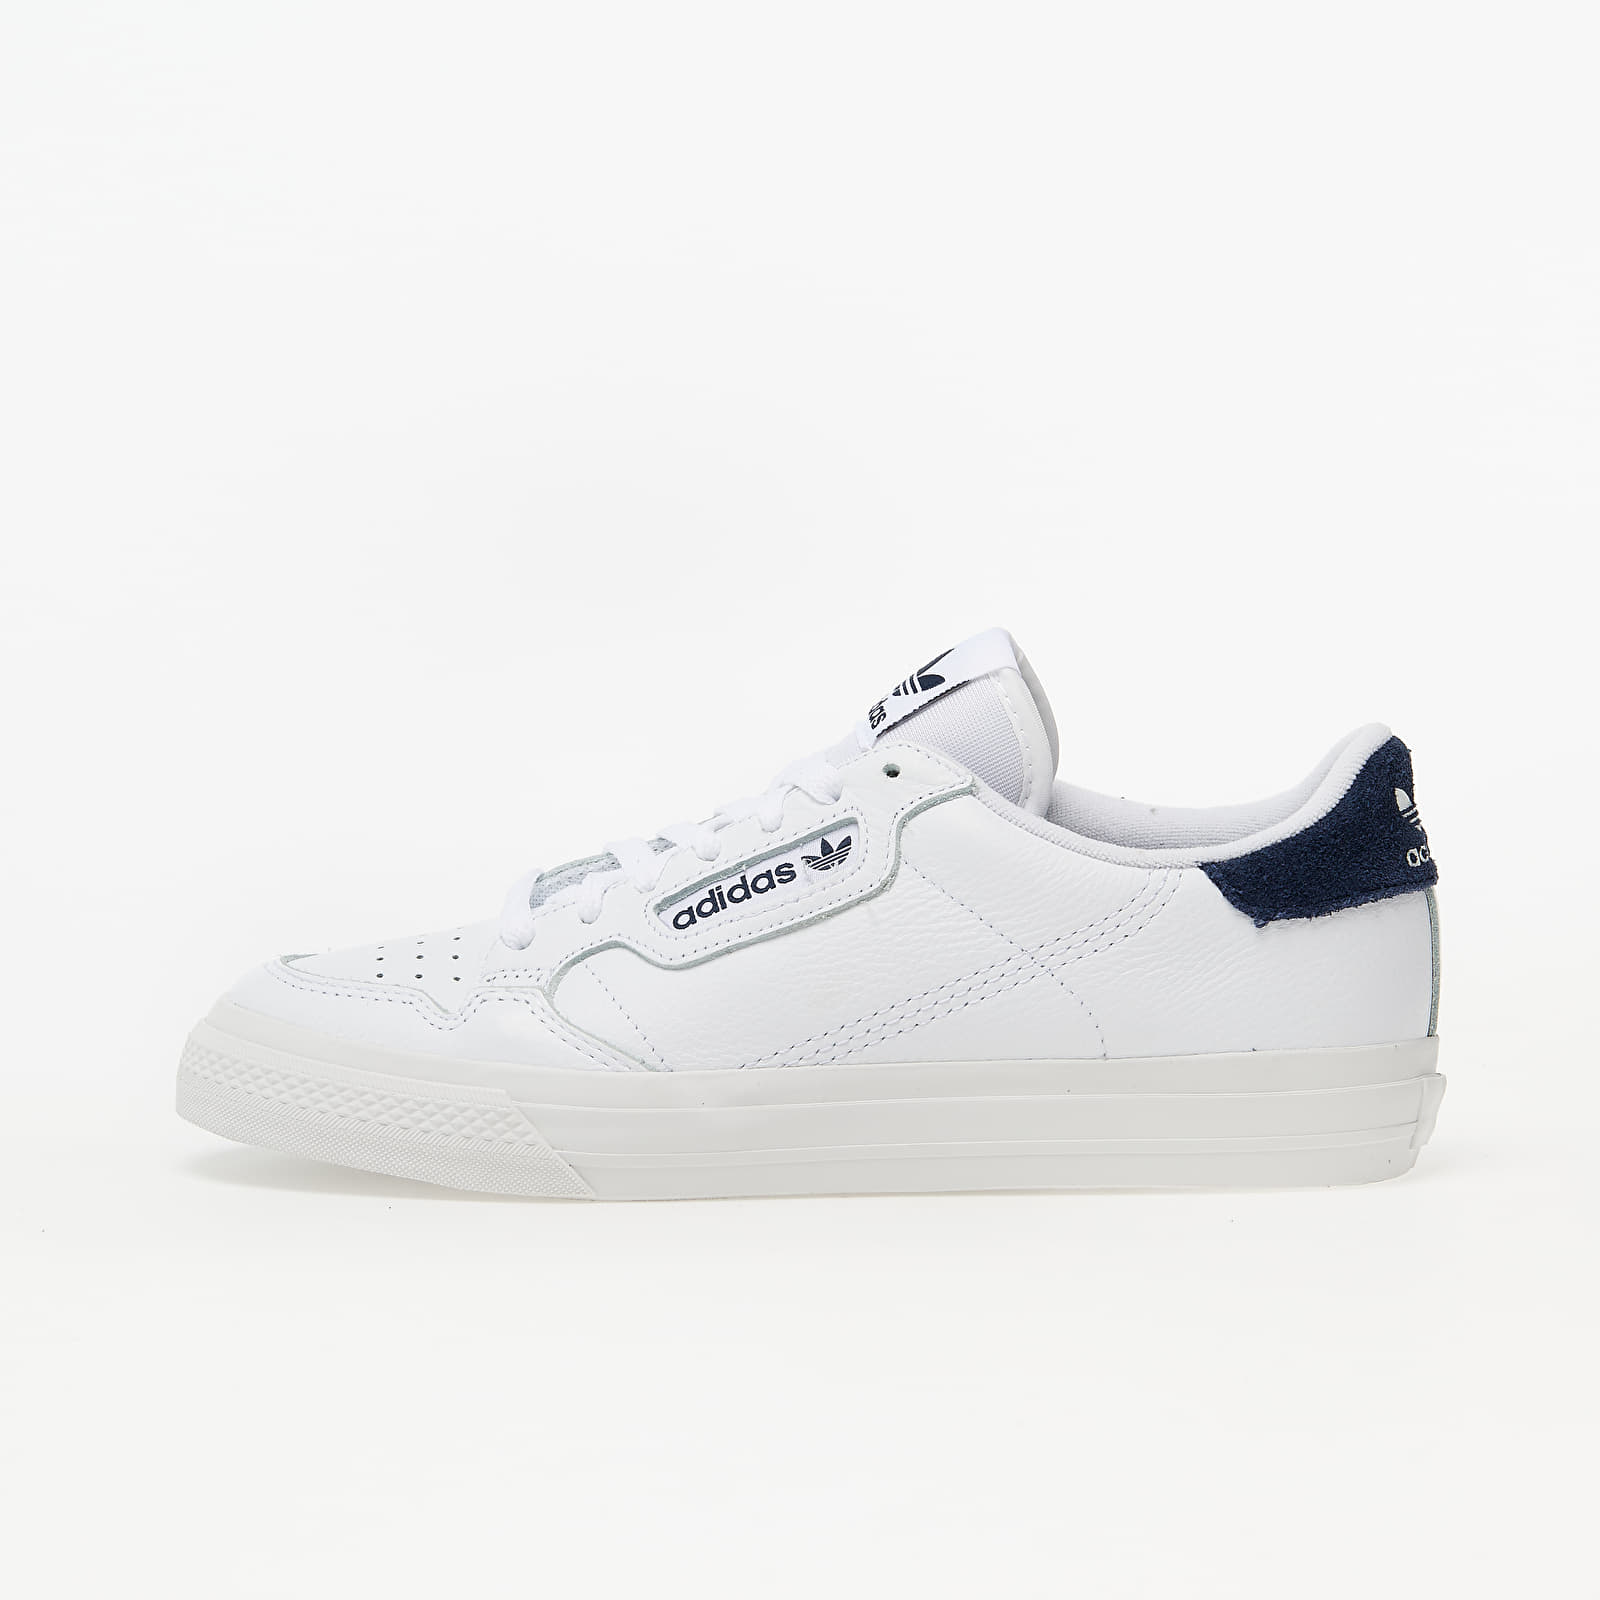 Men's shoes adidas Continental Vulc Ftwr White/ Ftwr White/ Collegiate Navy